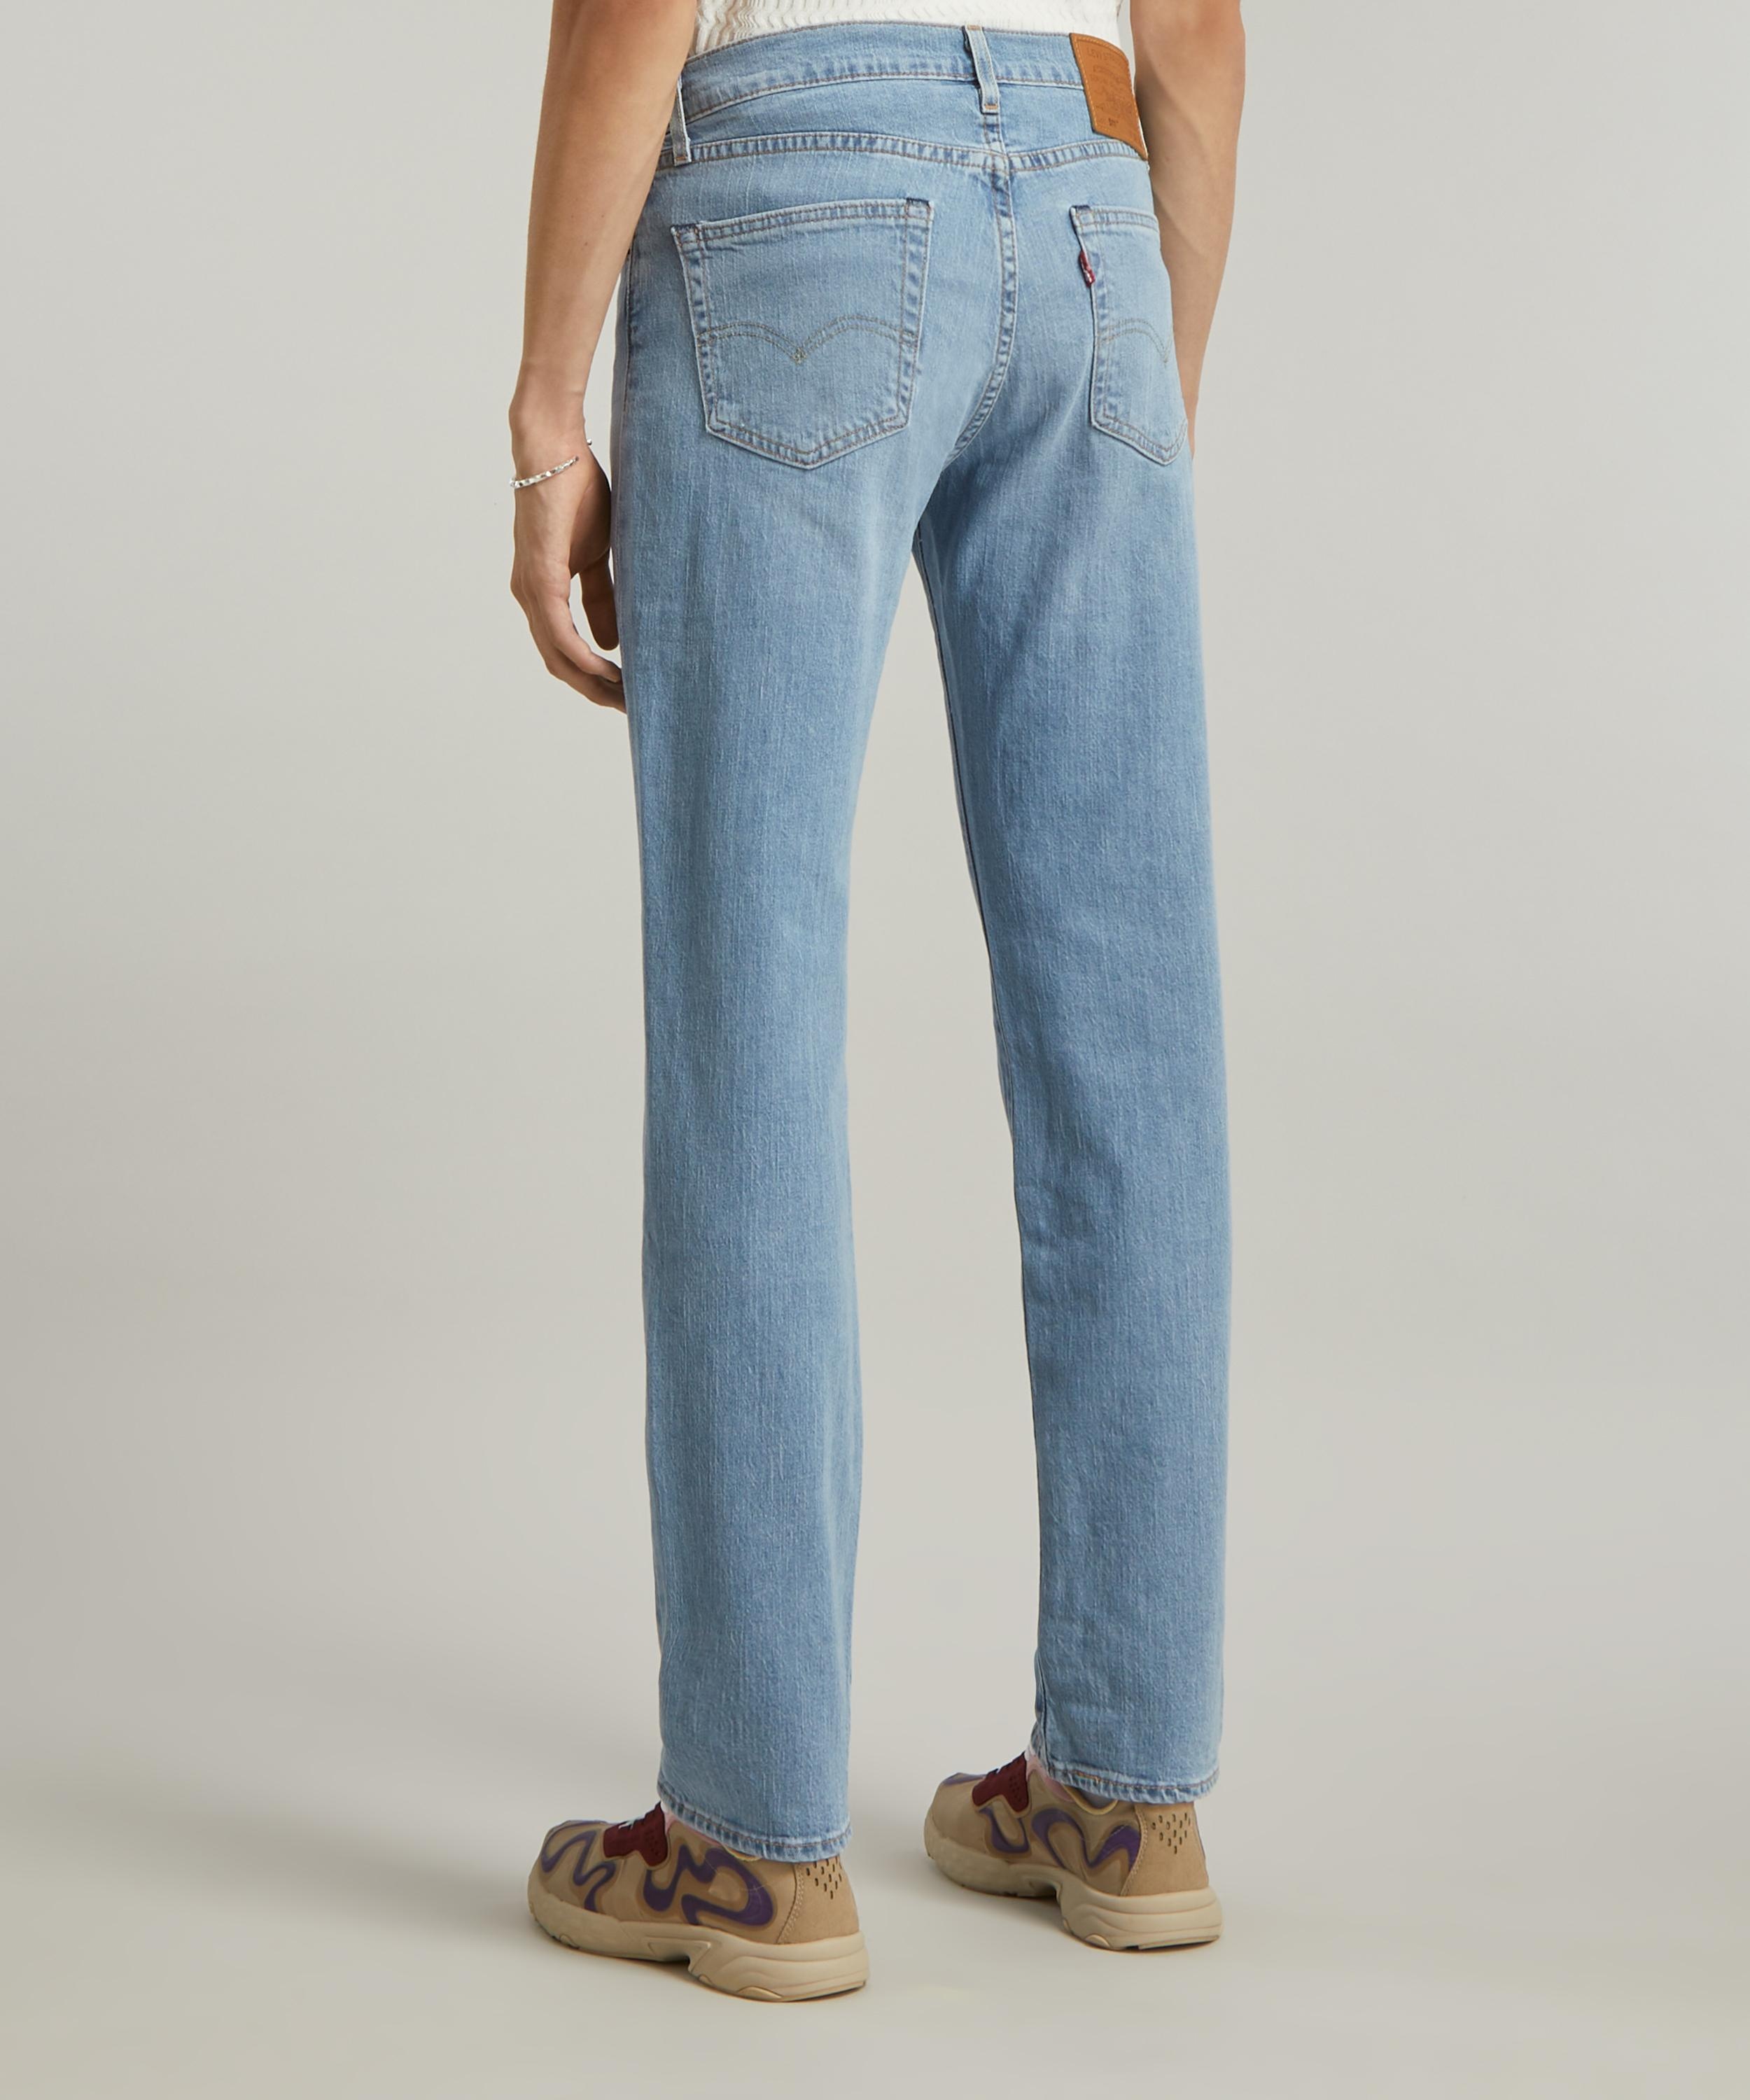 511 Slim Tabor Well Worn Jeans - 4